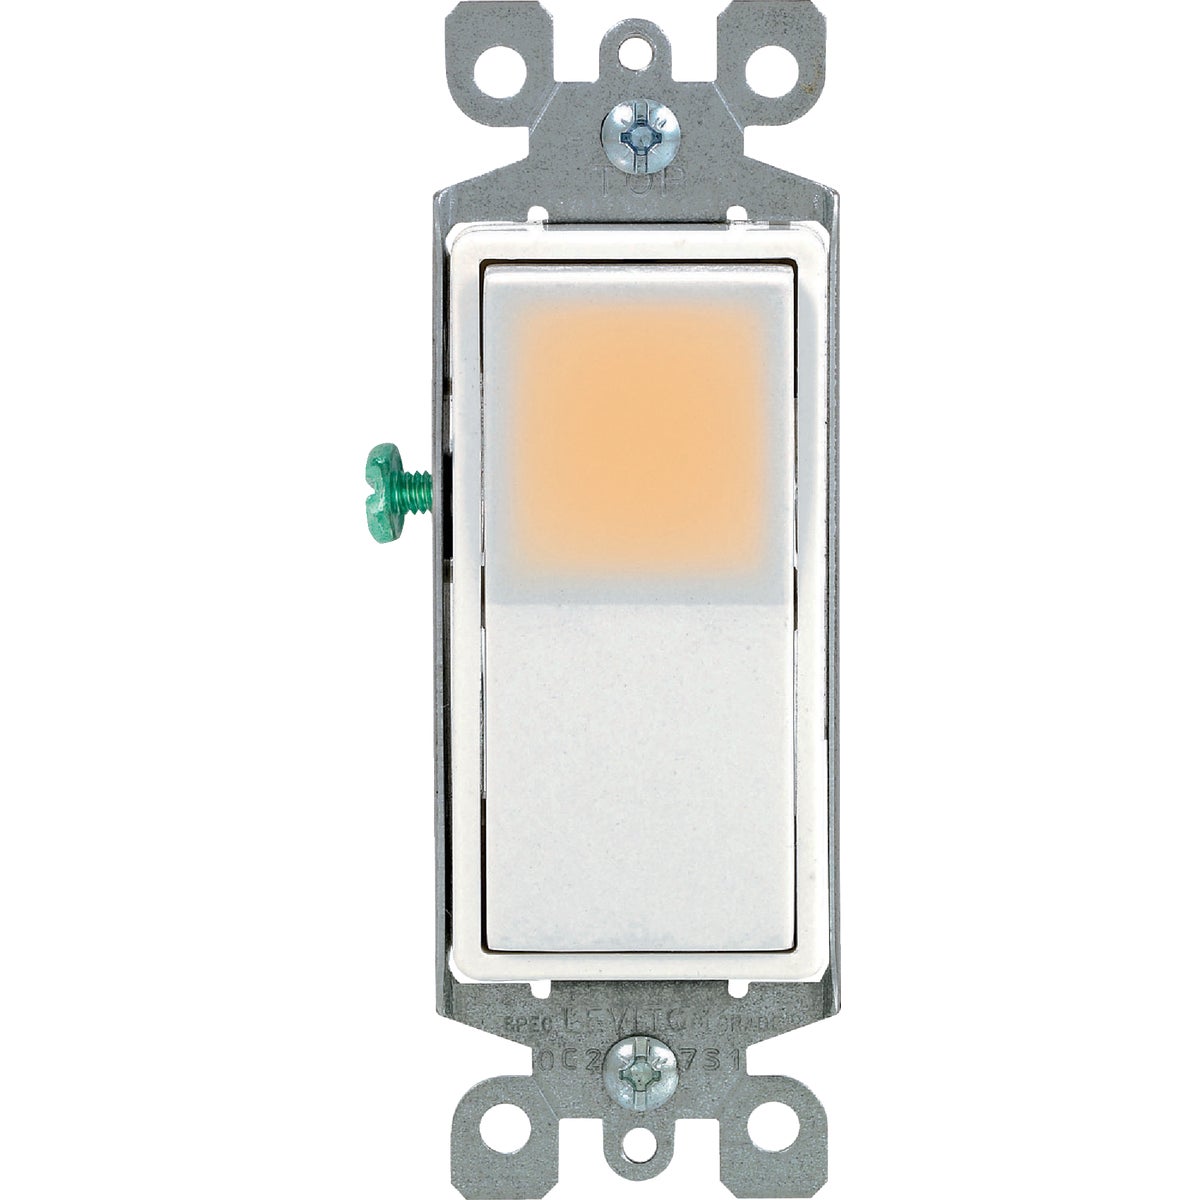 Item 524285, Illuminated 3-way Decora rocker switch allows faster installation with 